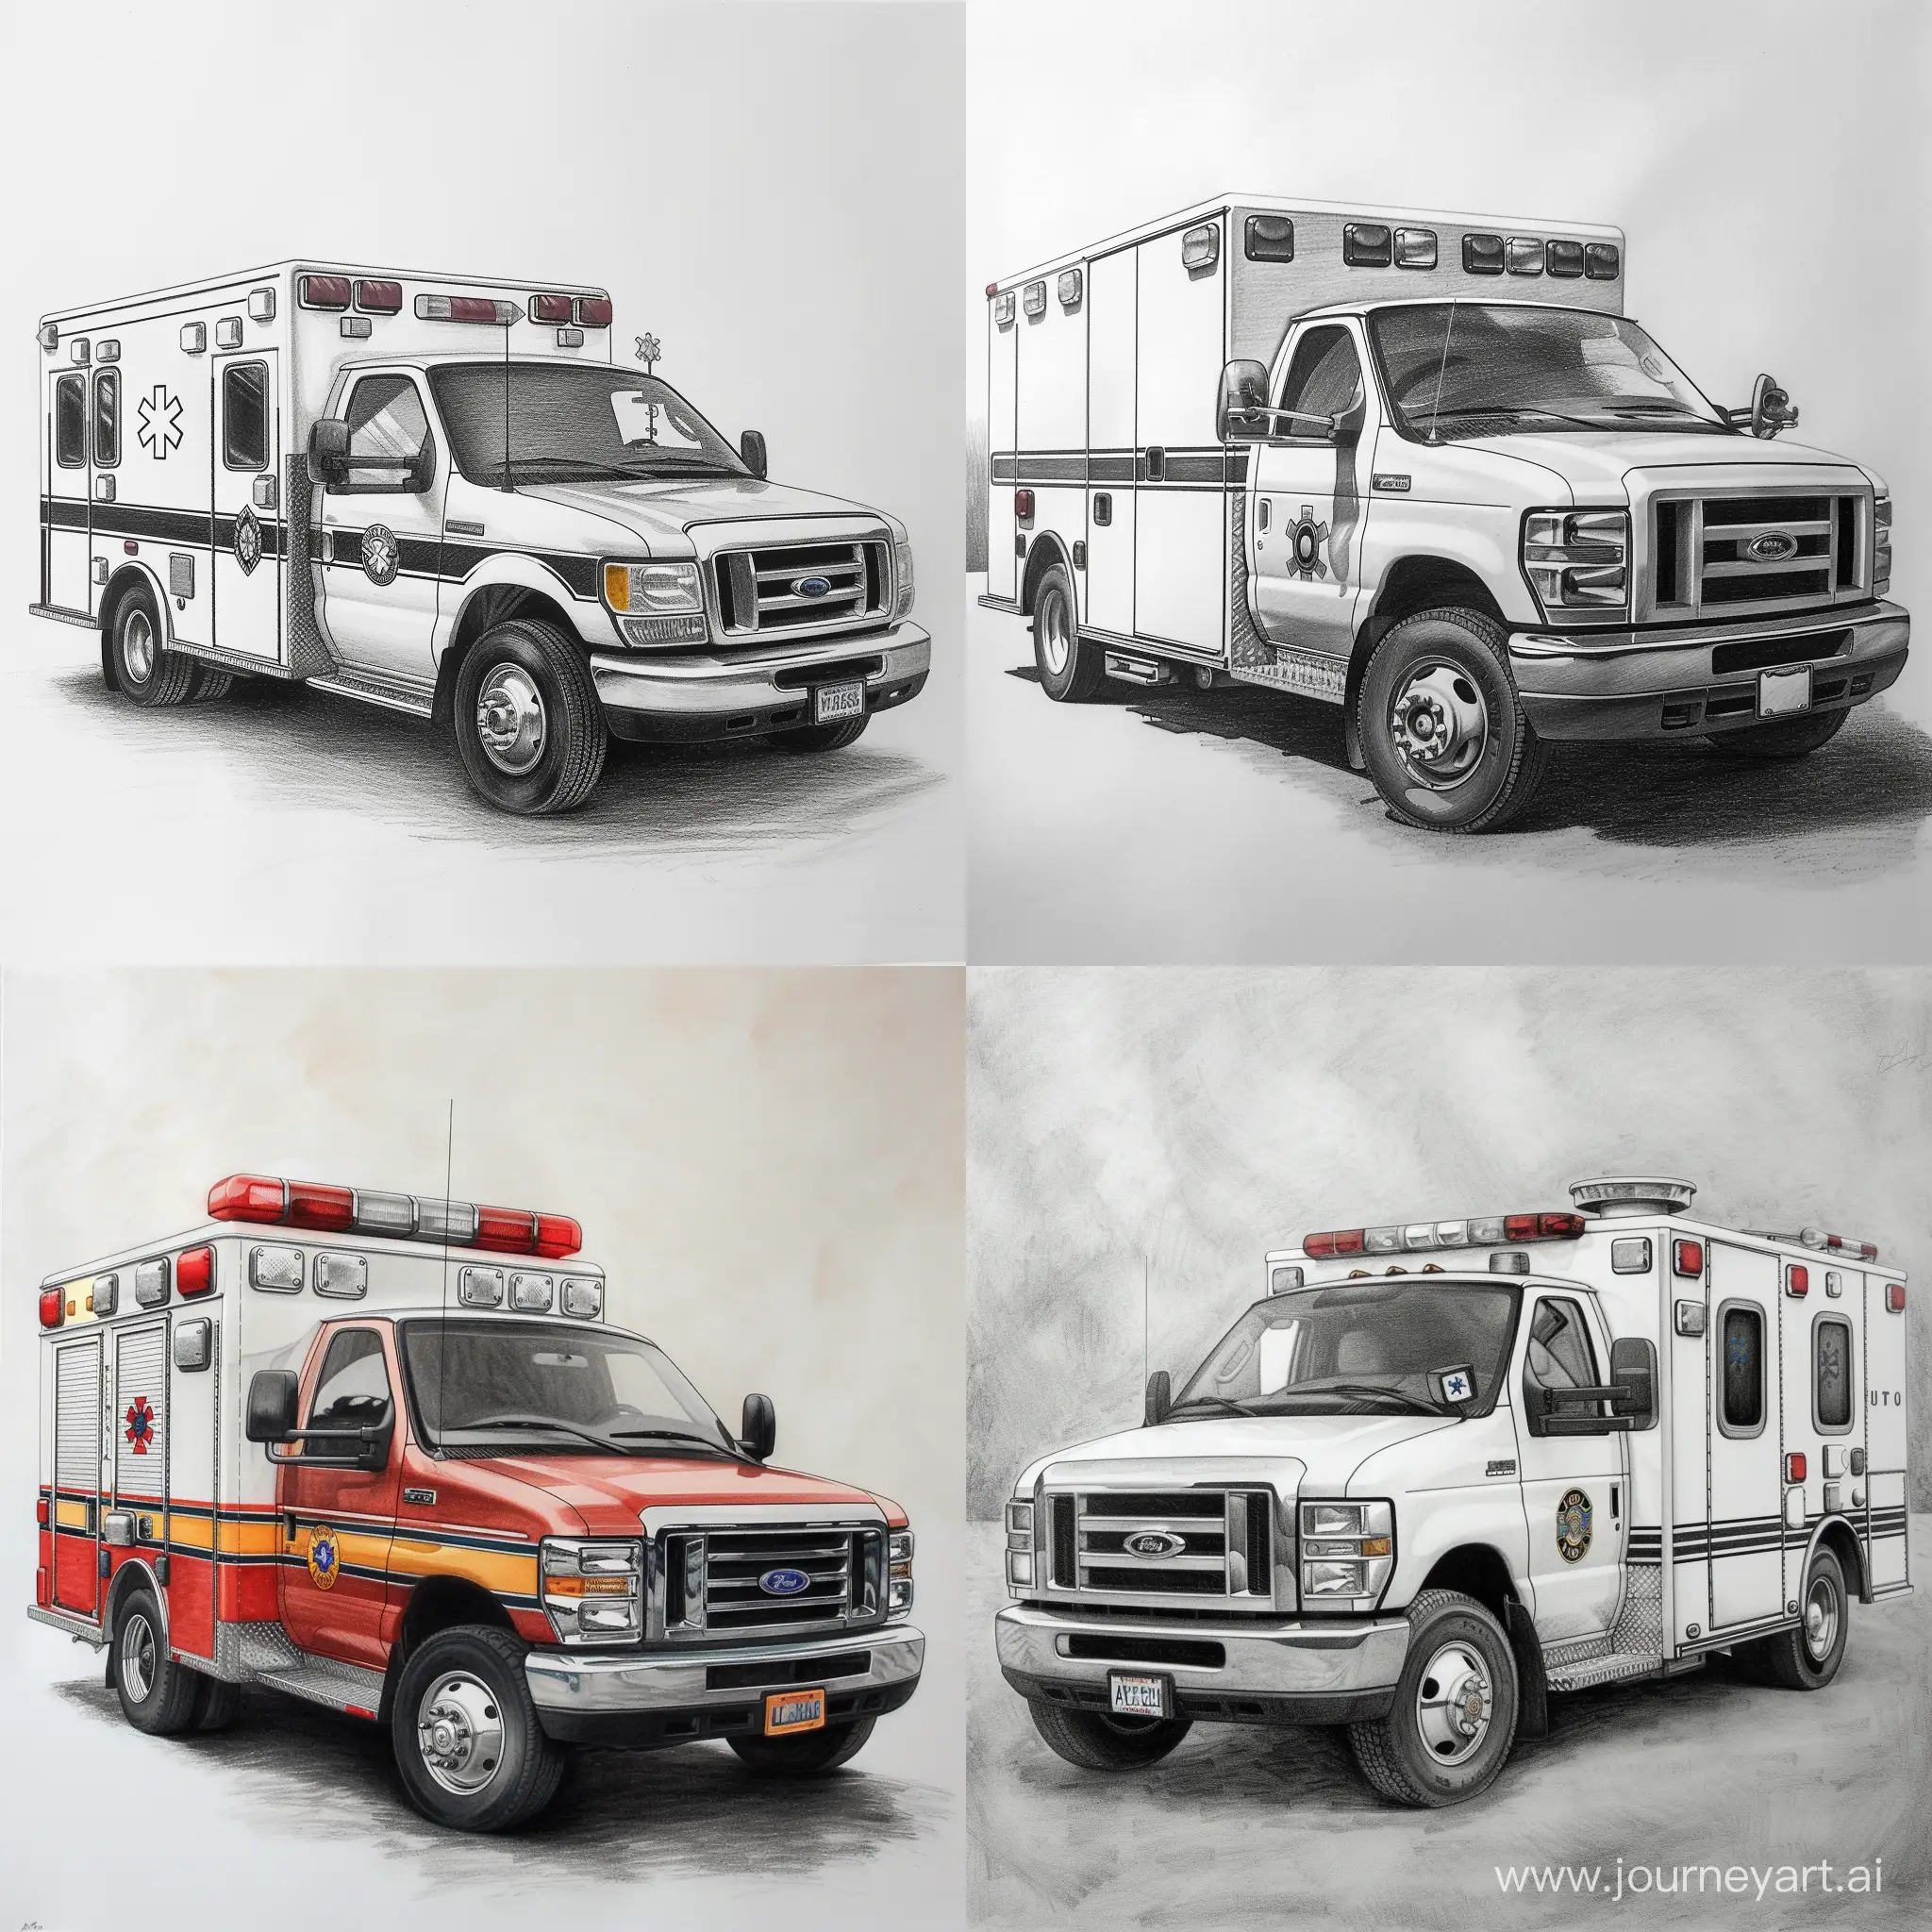 Emergency-Ambulance-Responding-with-Flashing-Lights